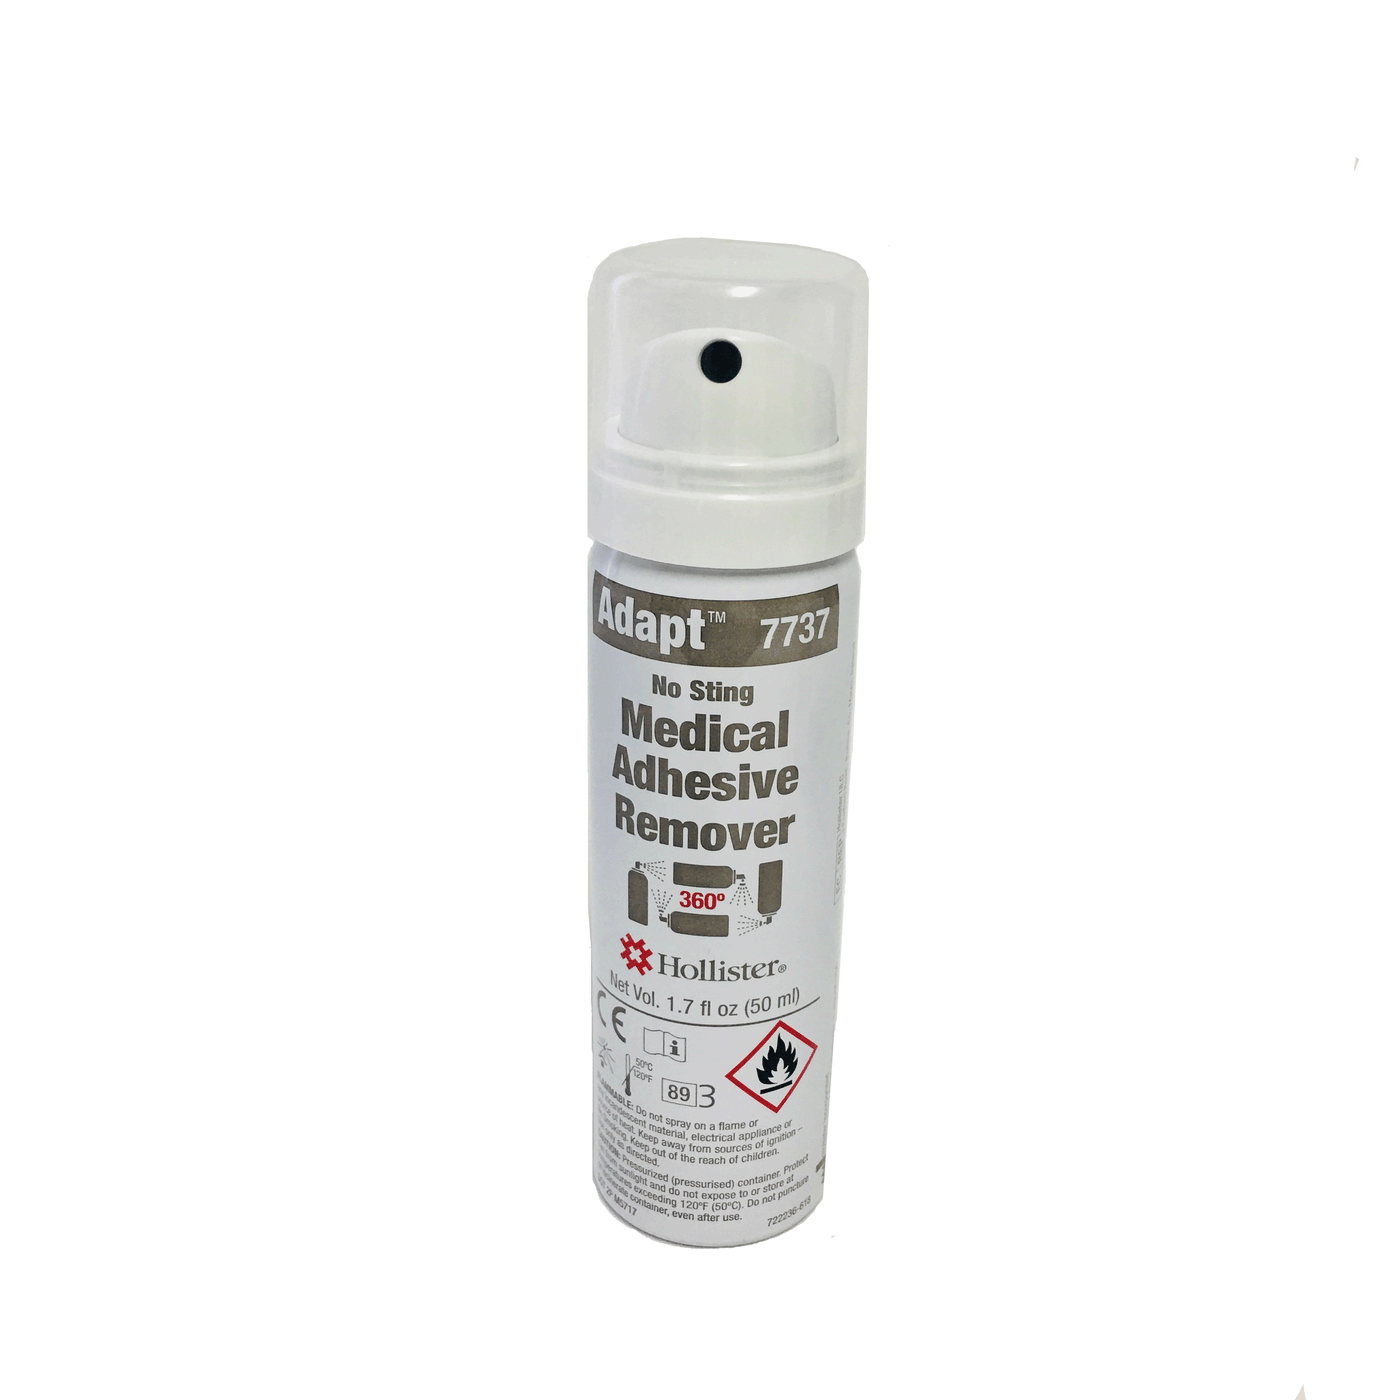 hollister adhesive remover spray